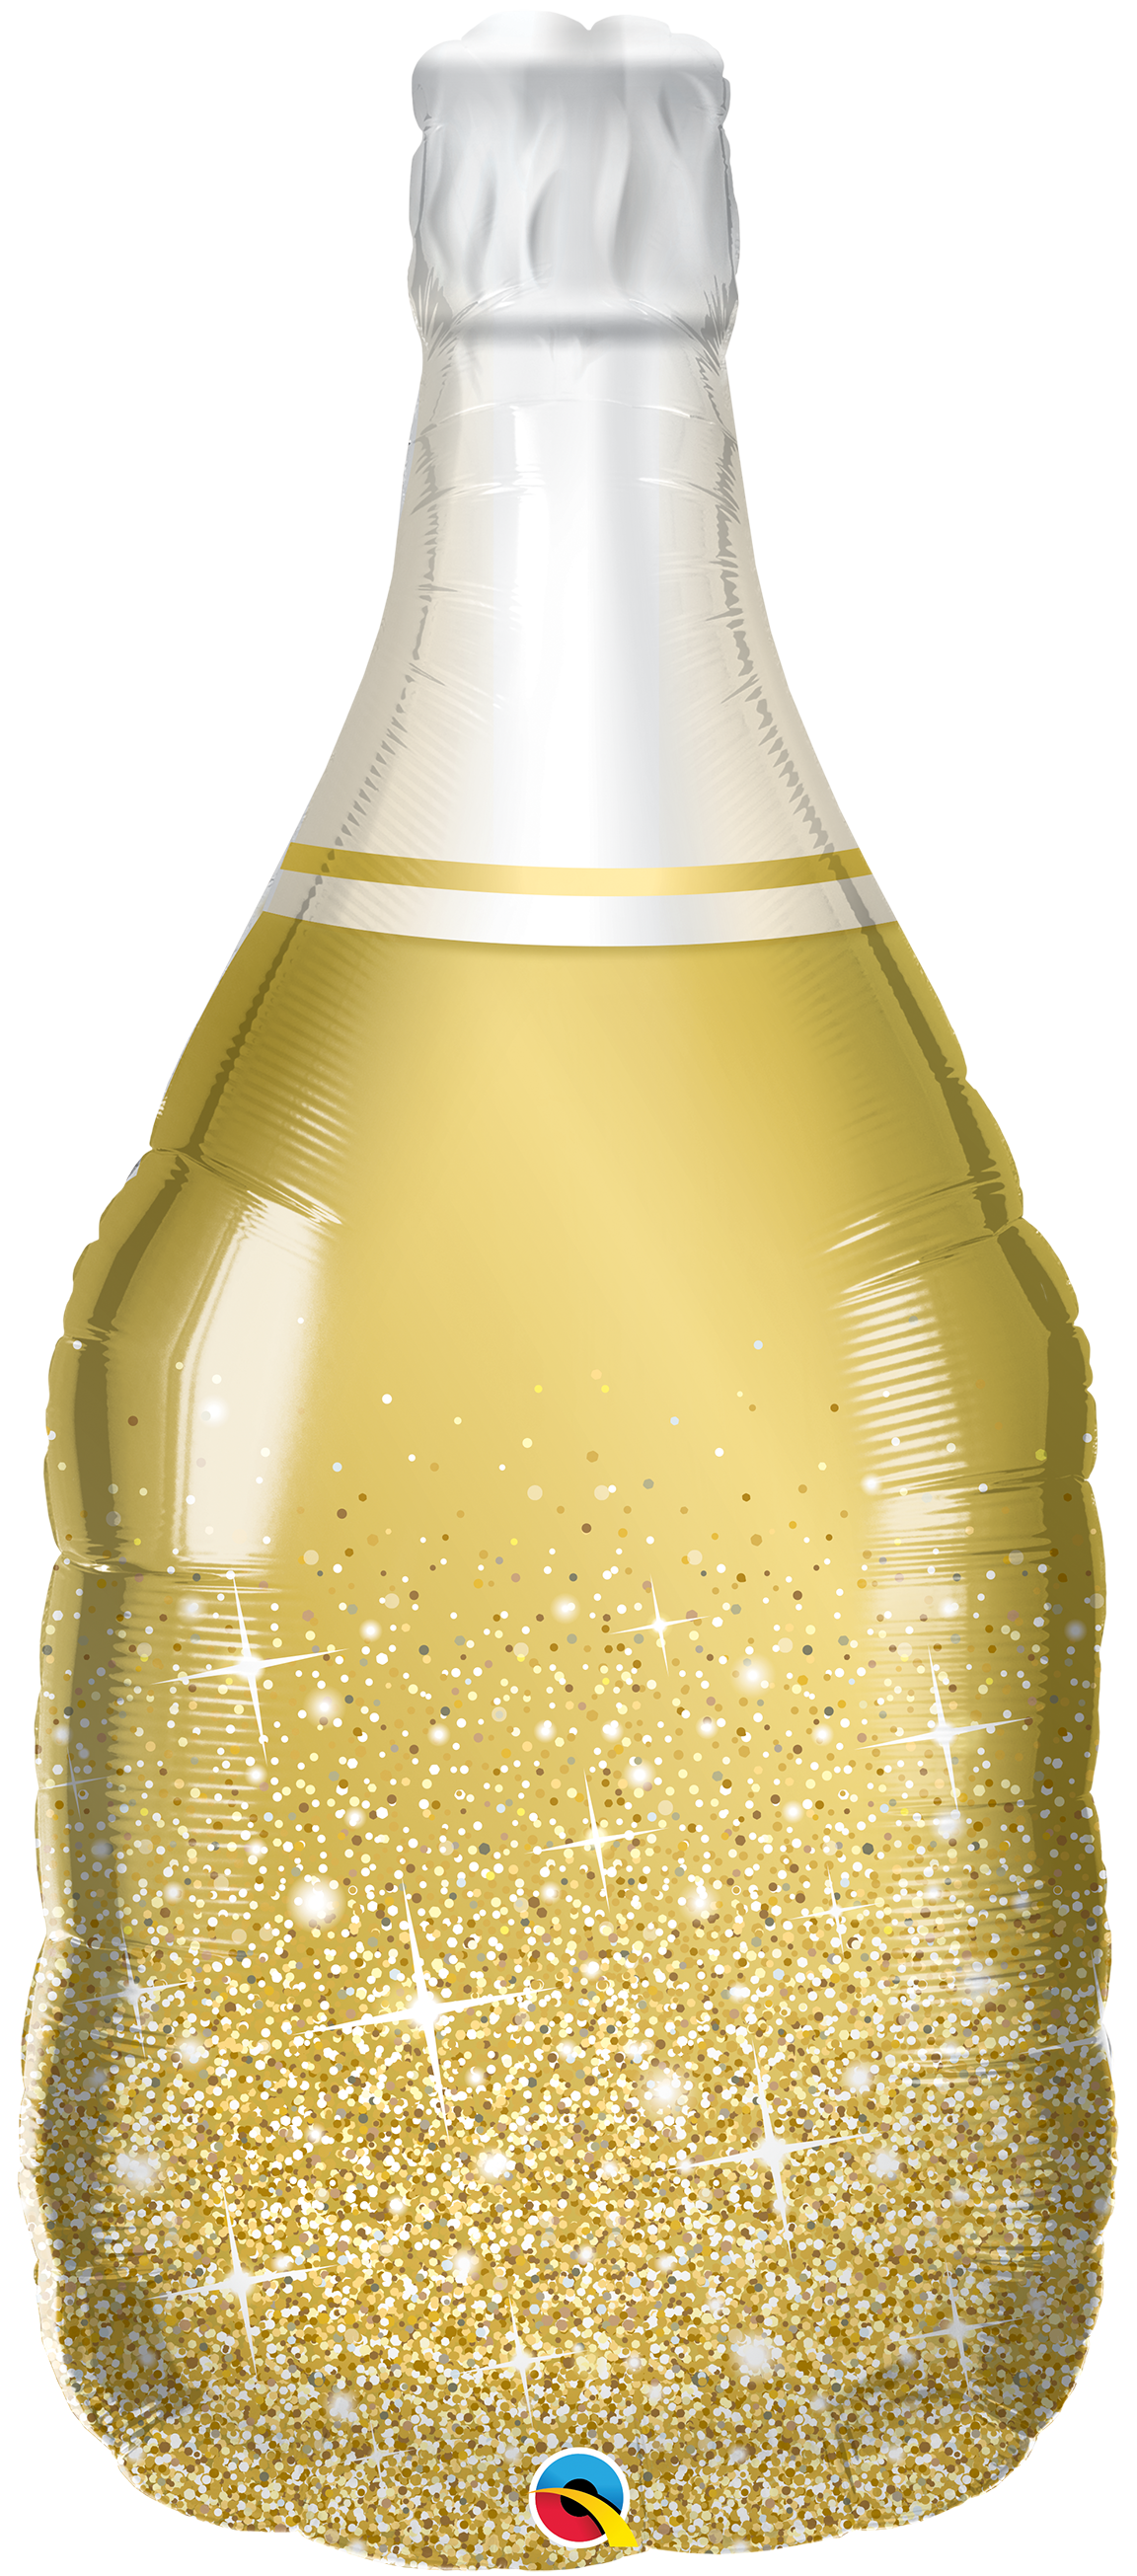 Golden Bubbly Wine Bottle - SuperShape